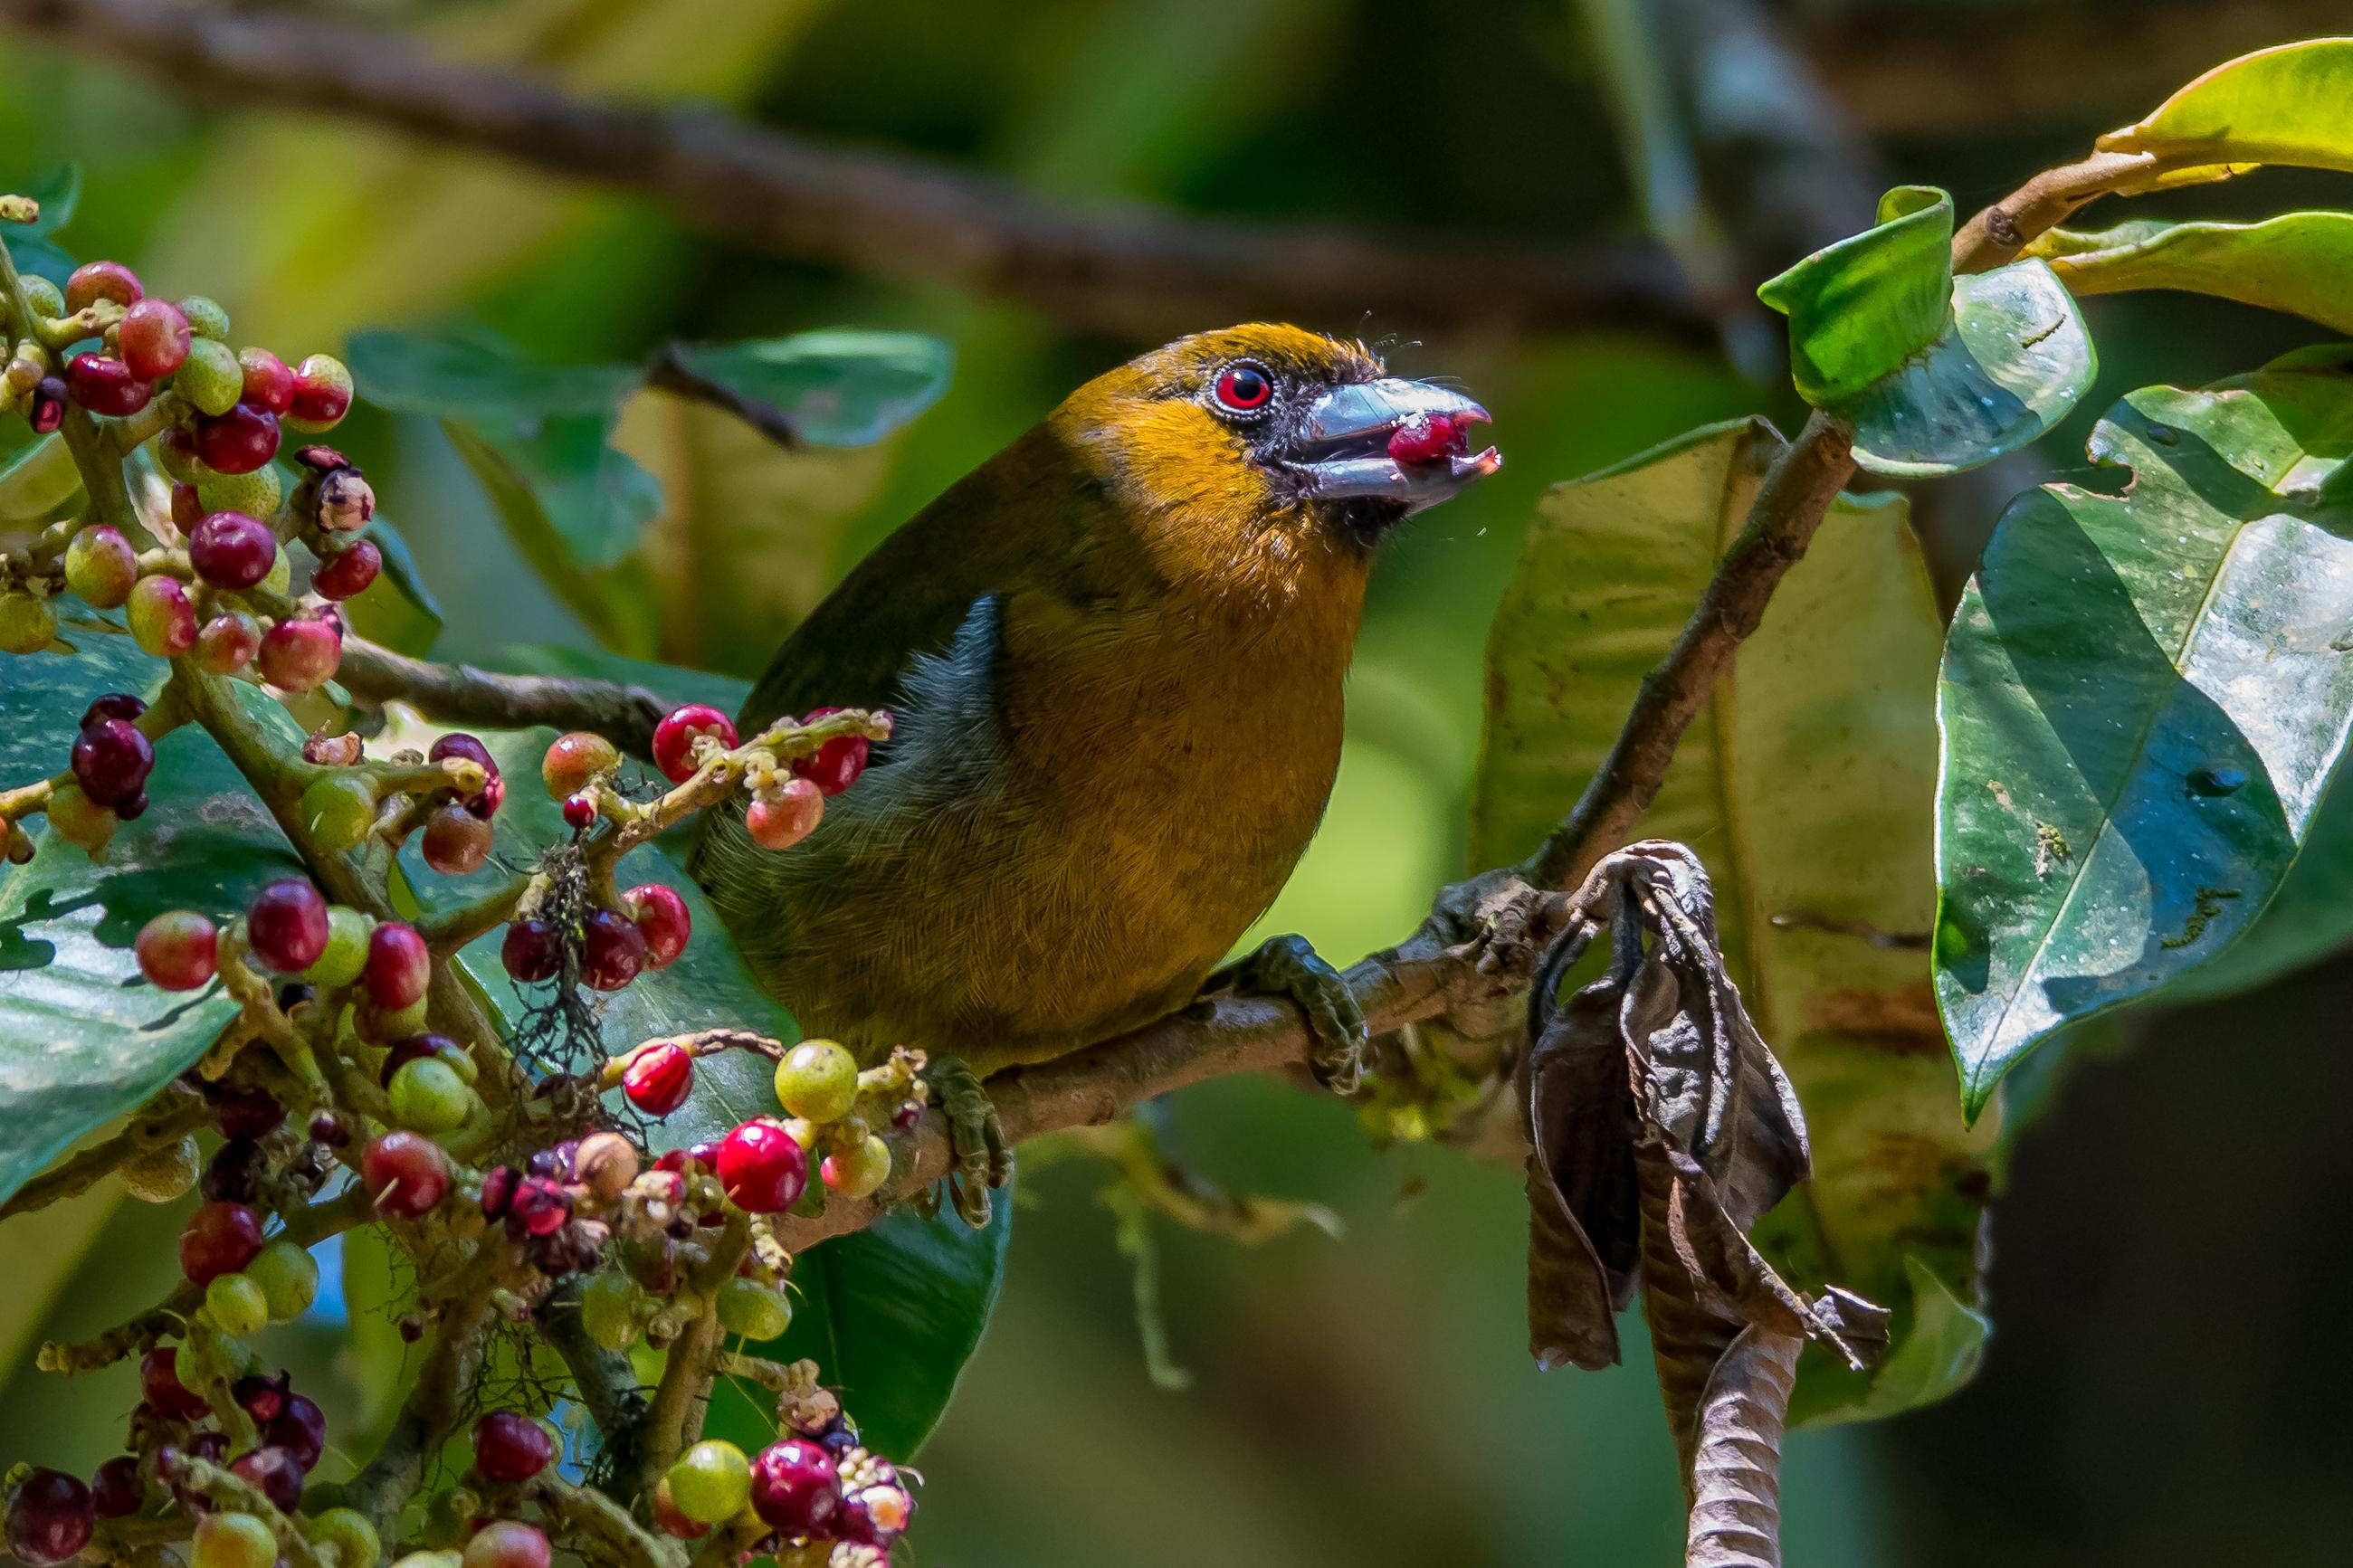 Travel and birding in Costa Rica